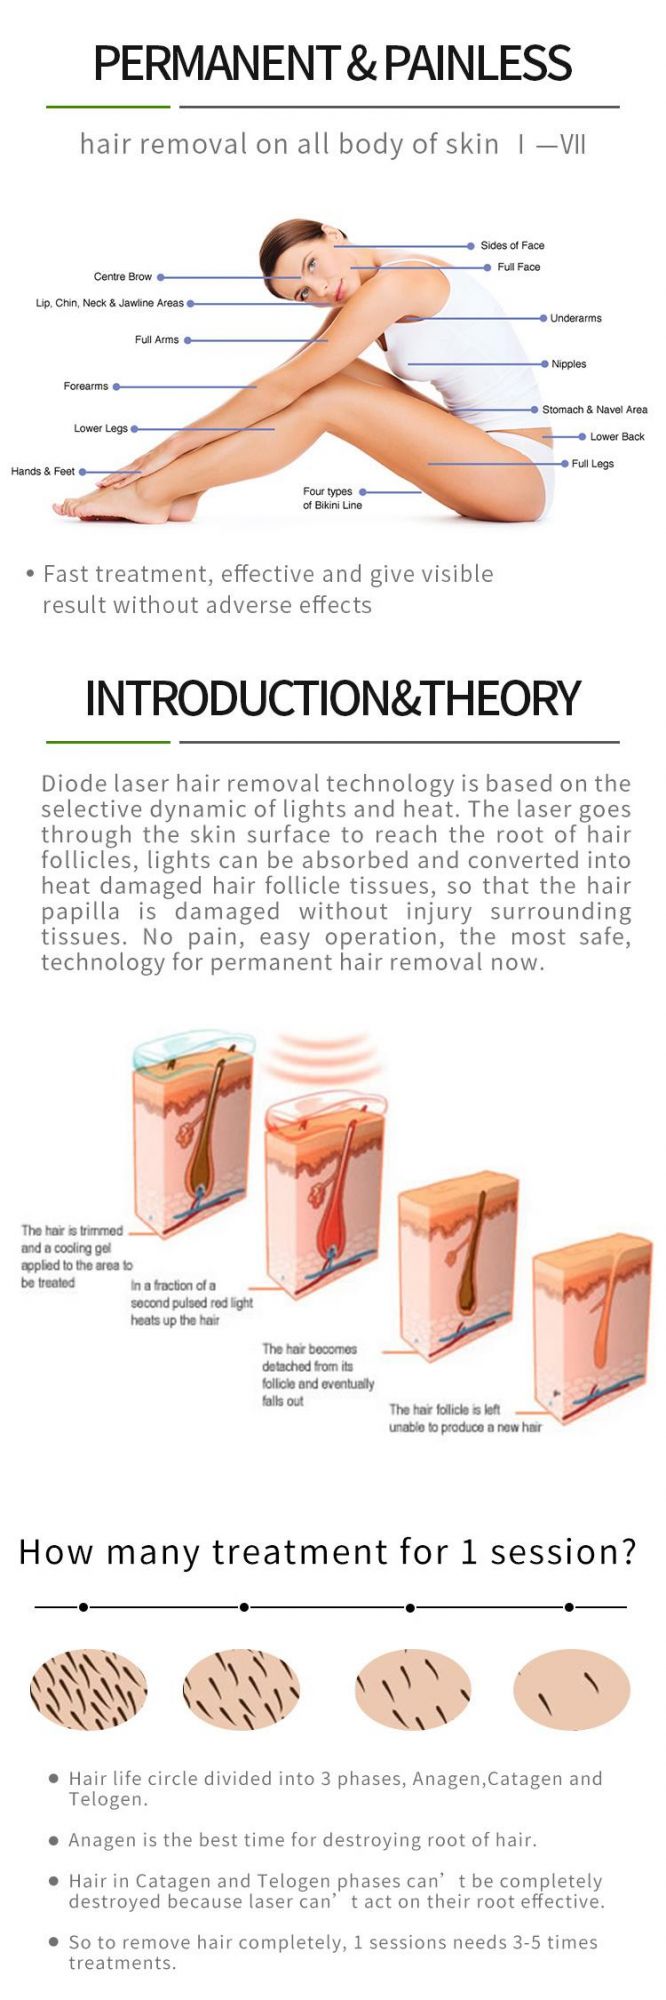 Desktop 755nm 808nm 1064nm Diode Laser Hair Removal Machine